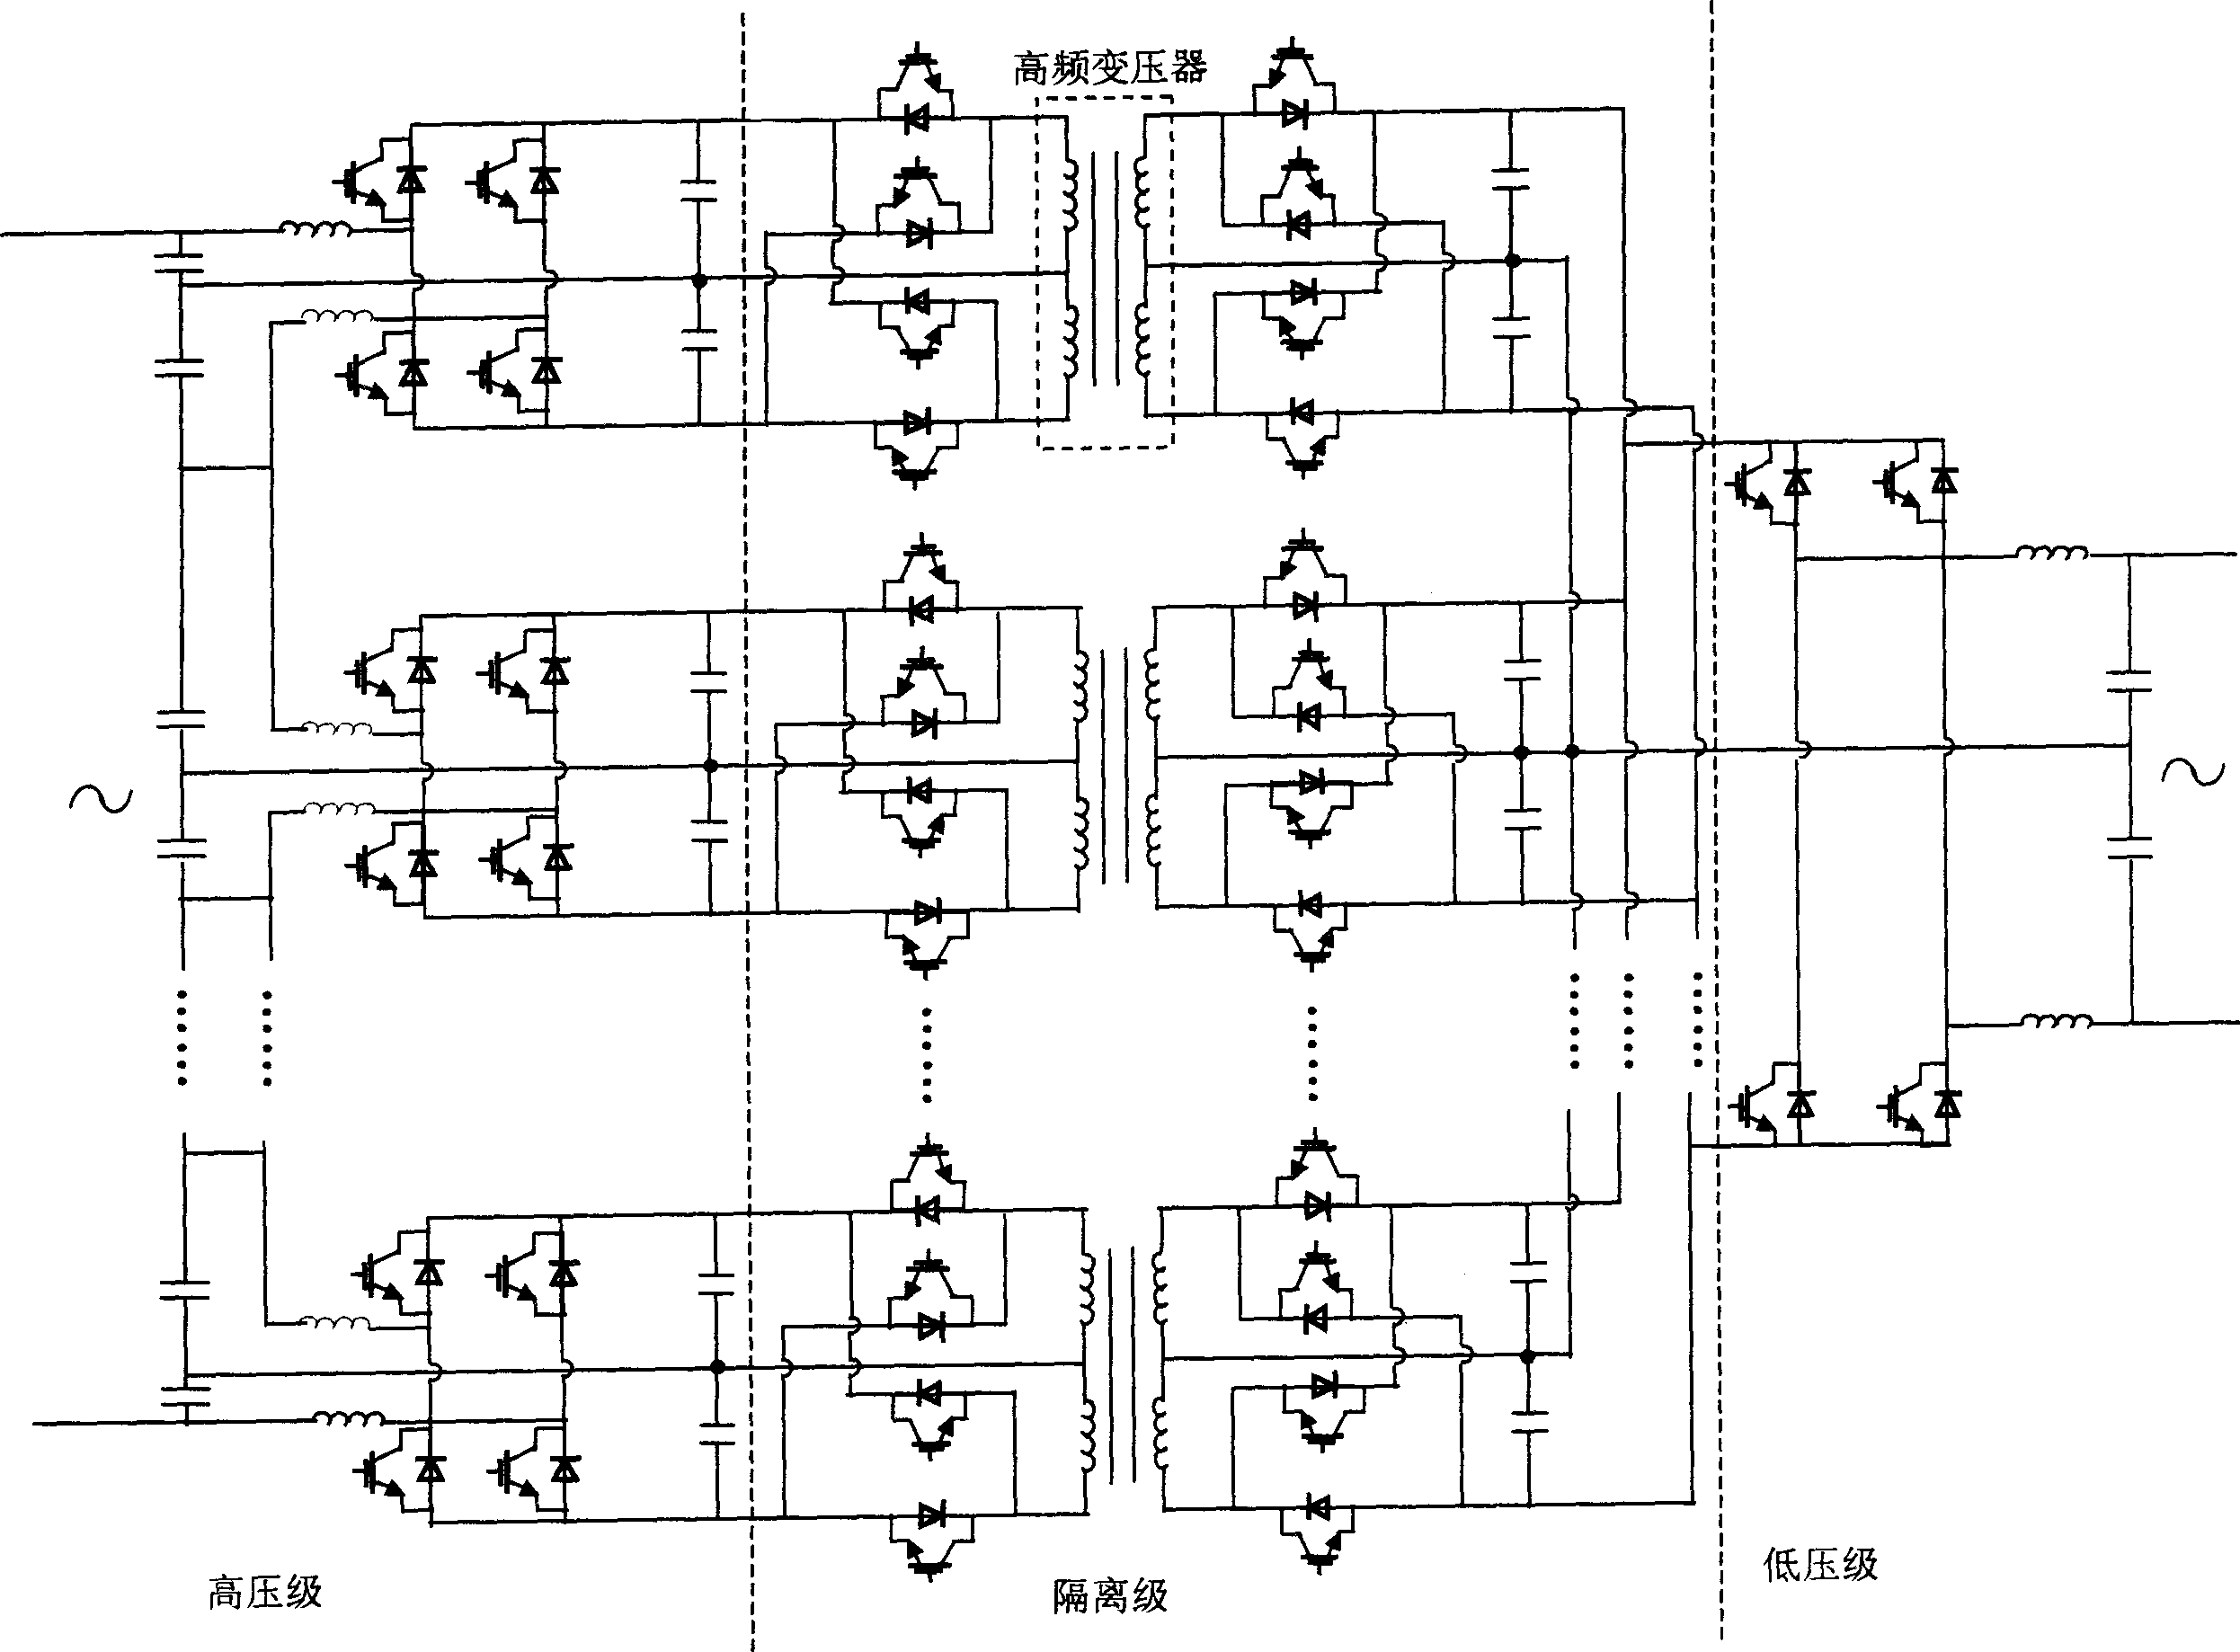 Electric power electronic transformer